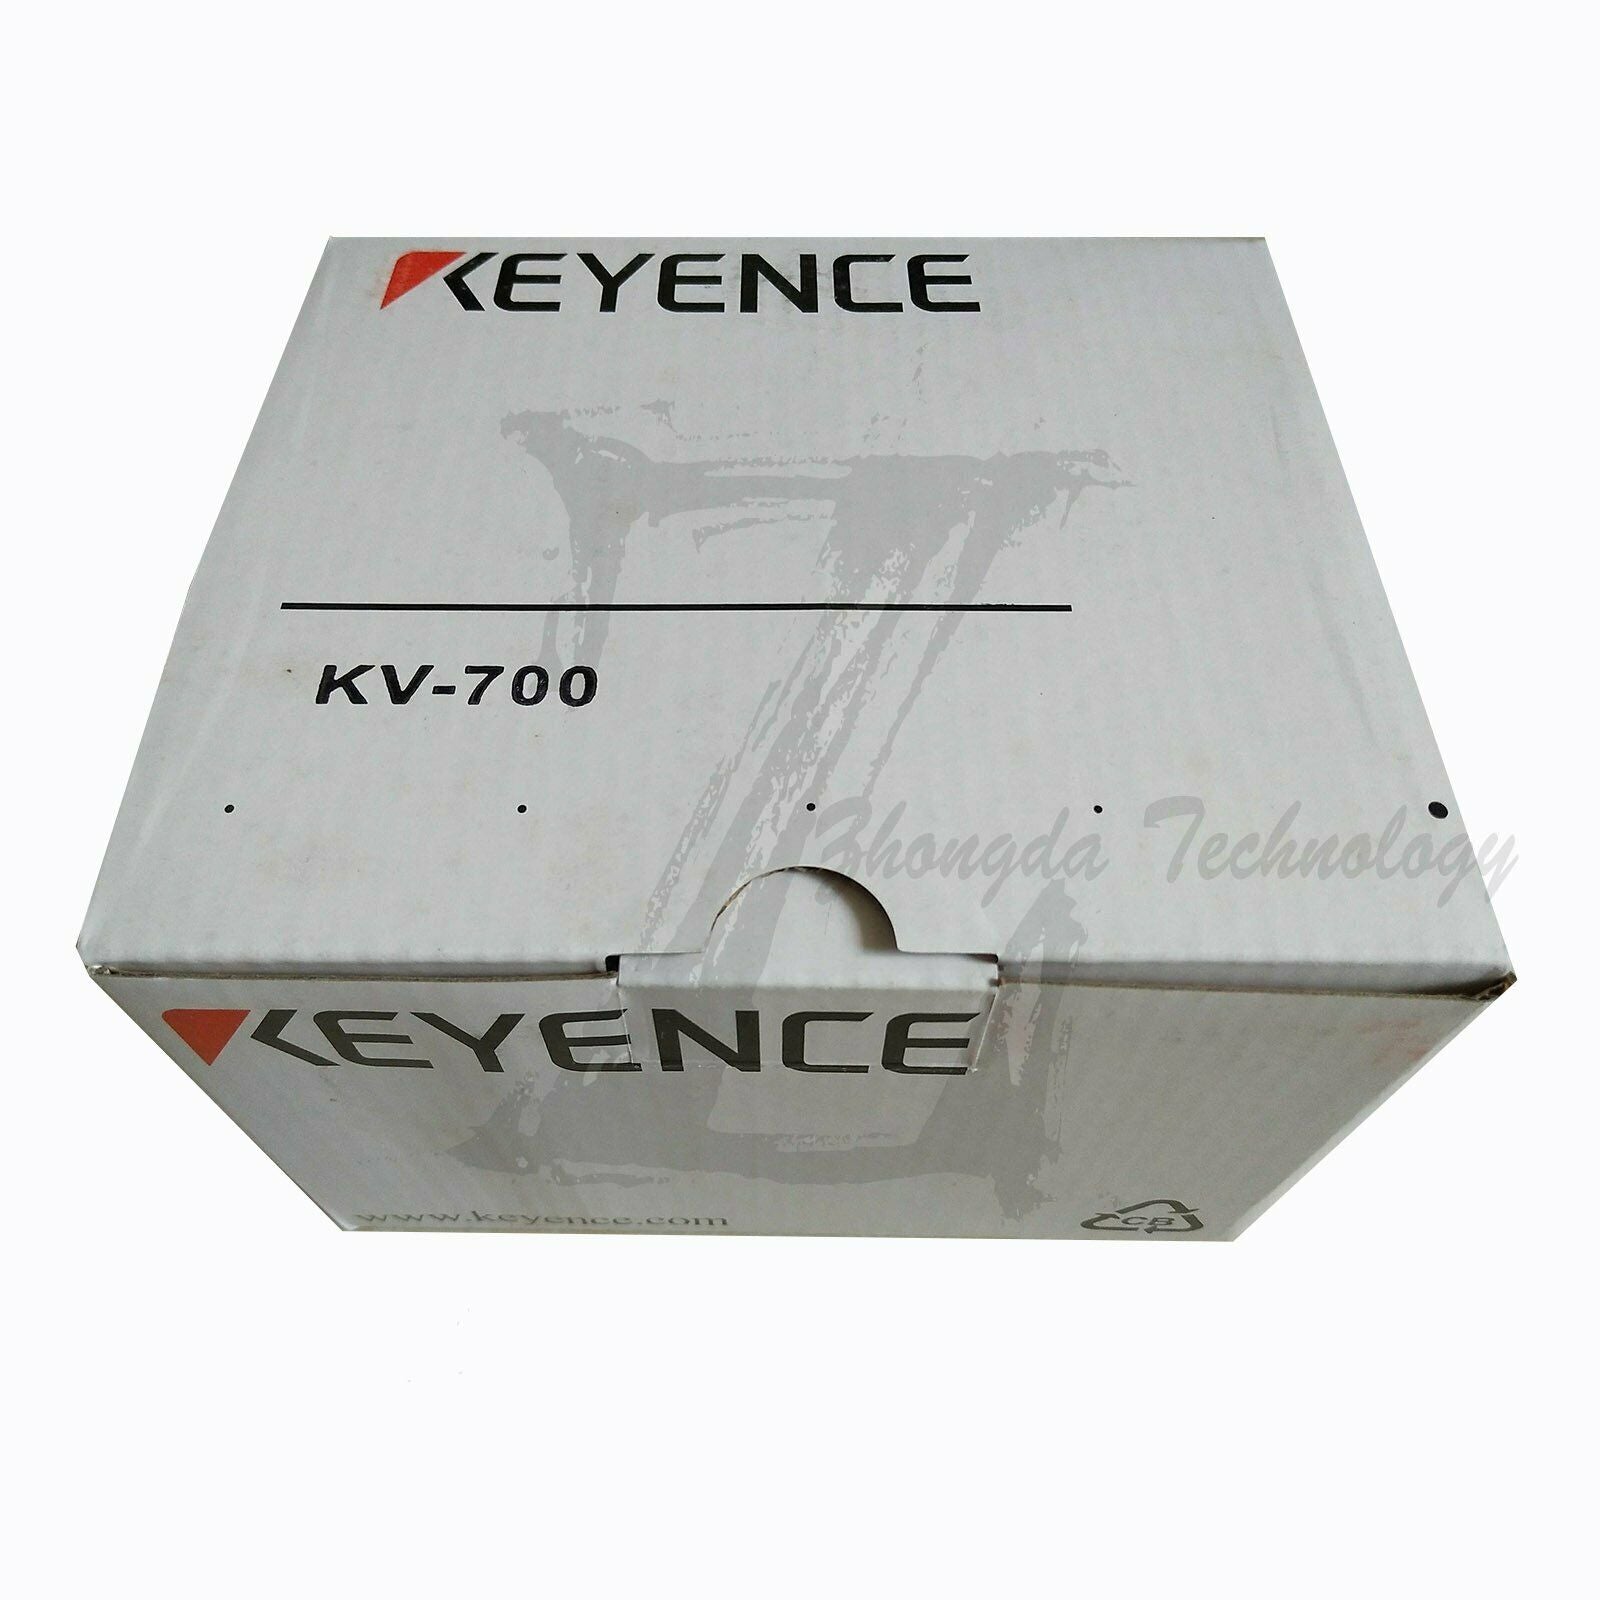 1pcs NEW KEYENCE KV-700 Controller module KOEED 201-500, import_2020_10_10_031751, Keyence, NEW, Other